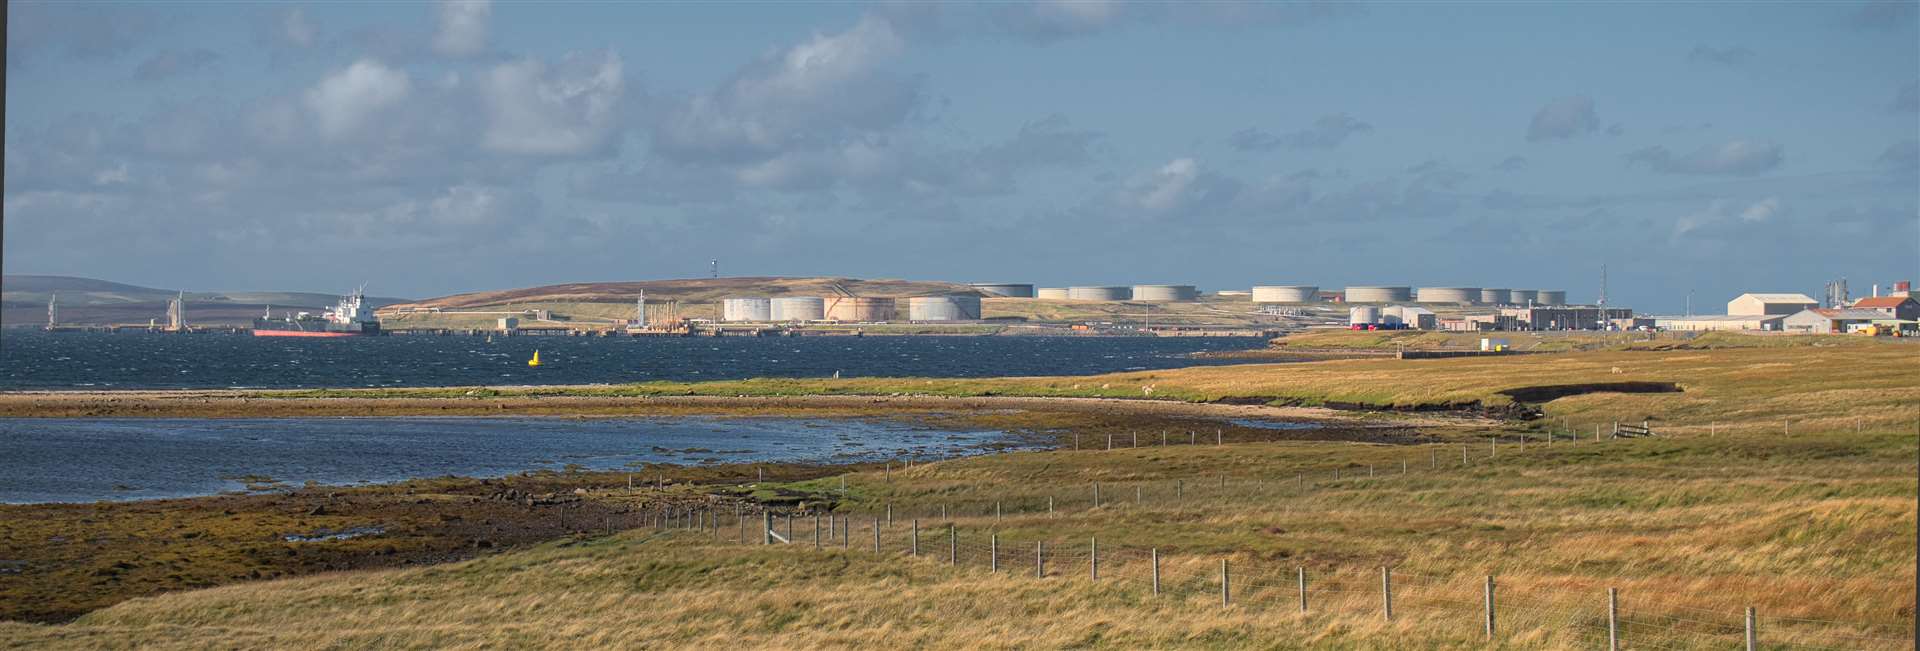 Sullom Voe oil terminal and gas plant in Shetland.